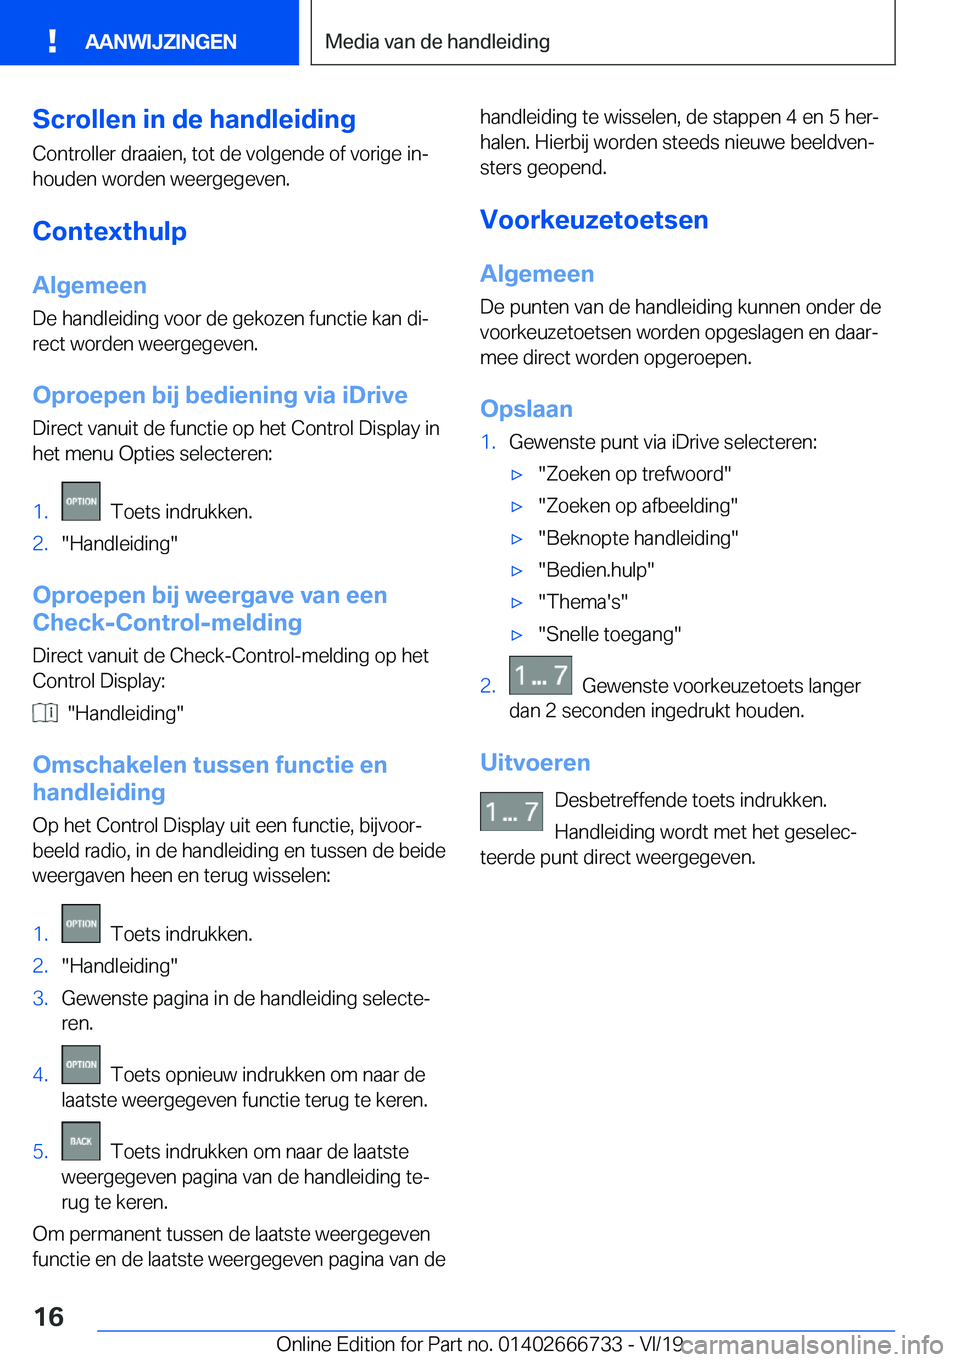 BMW M5 2020  Instructieboekjes (in Dutch) �S�c�r�o�l�l�e�n��i�n��d�e��h�a�n�d�l�e�i�d�i�n�g
�C�o�n�t�r�o�l�l�e�r��d�r�a�a�i�e�n�,��t�o�t��d�e��v�o�l�g�e�n�d�e��o�f��v�o�r�i�g�e��i�nj
�h�o�u�d�e�n��w�o�r�d�e�n��w�e�e�r�g�e�g�e�v�e